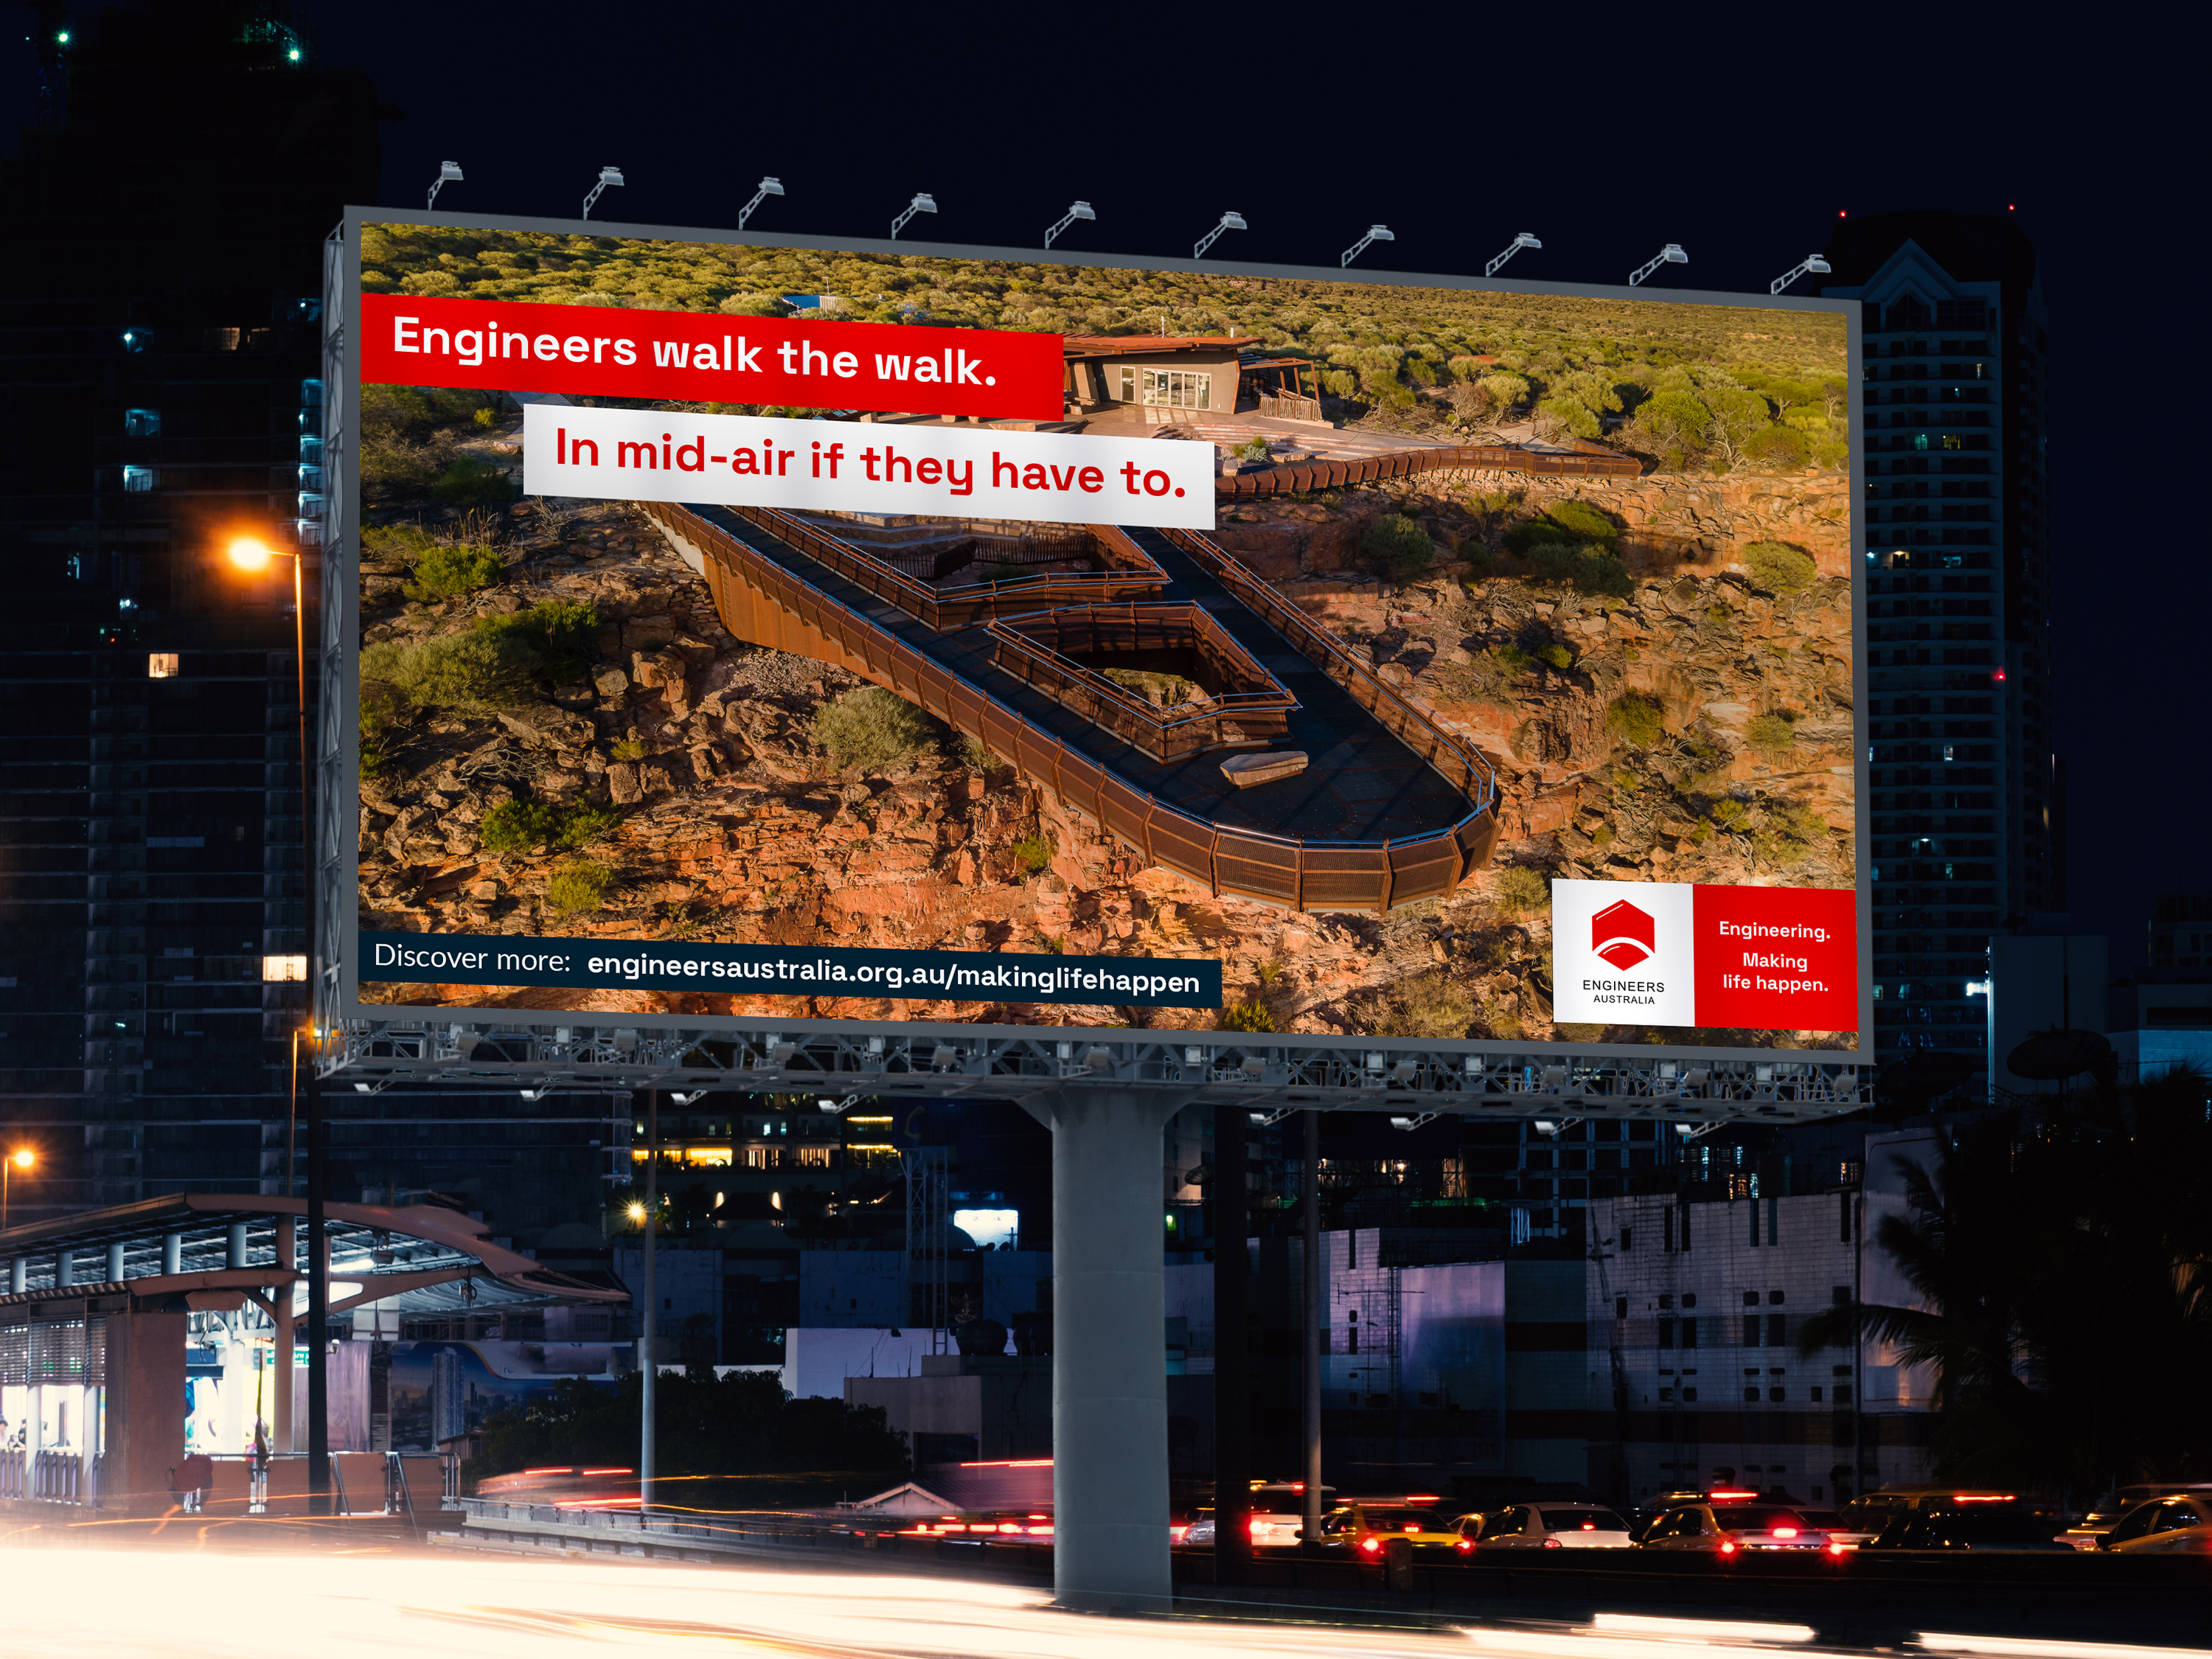 Ooh billboard displaying Engineering Australia advertisement